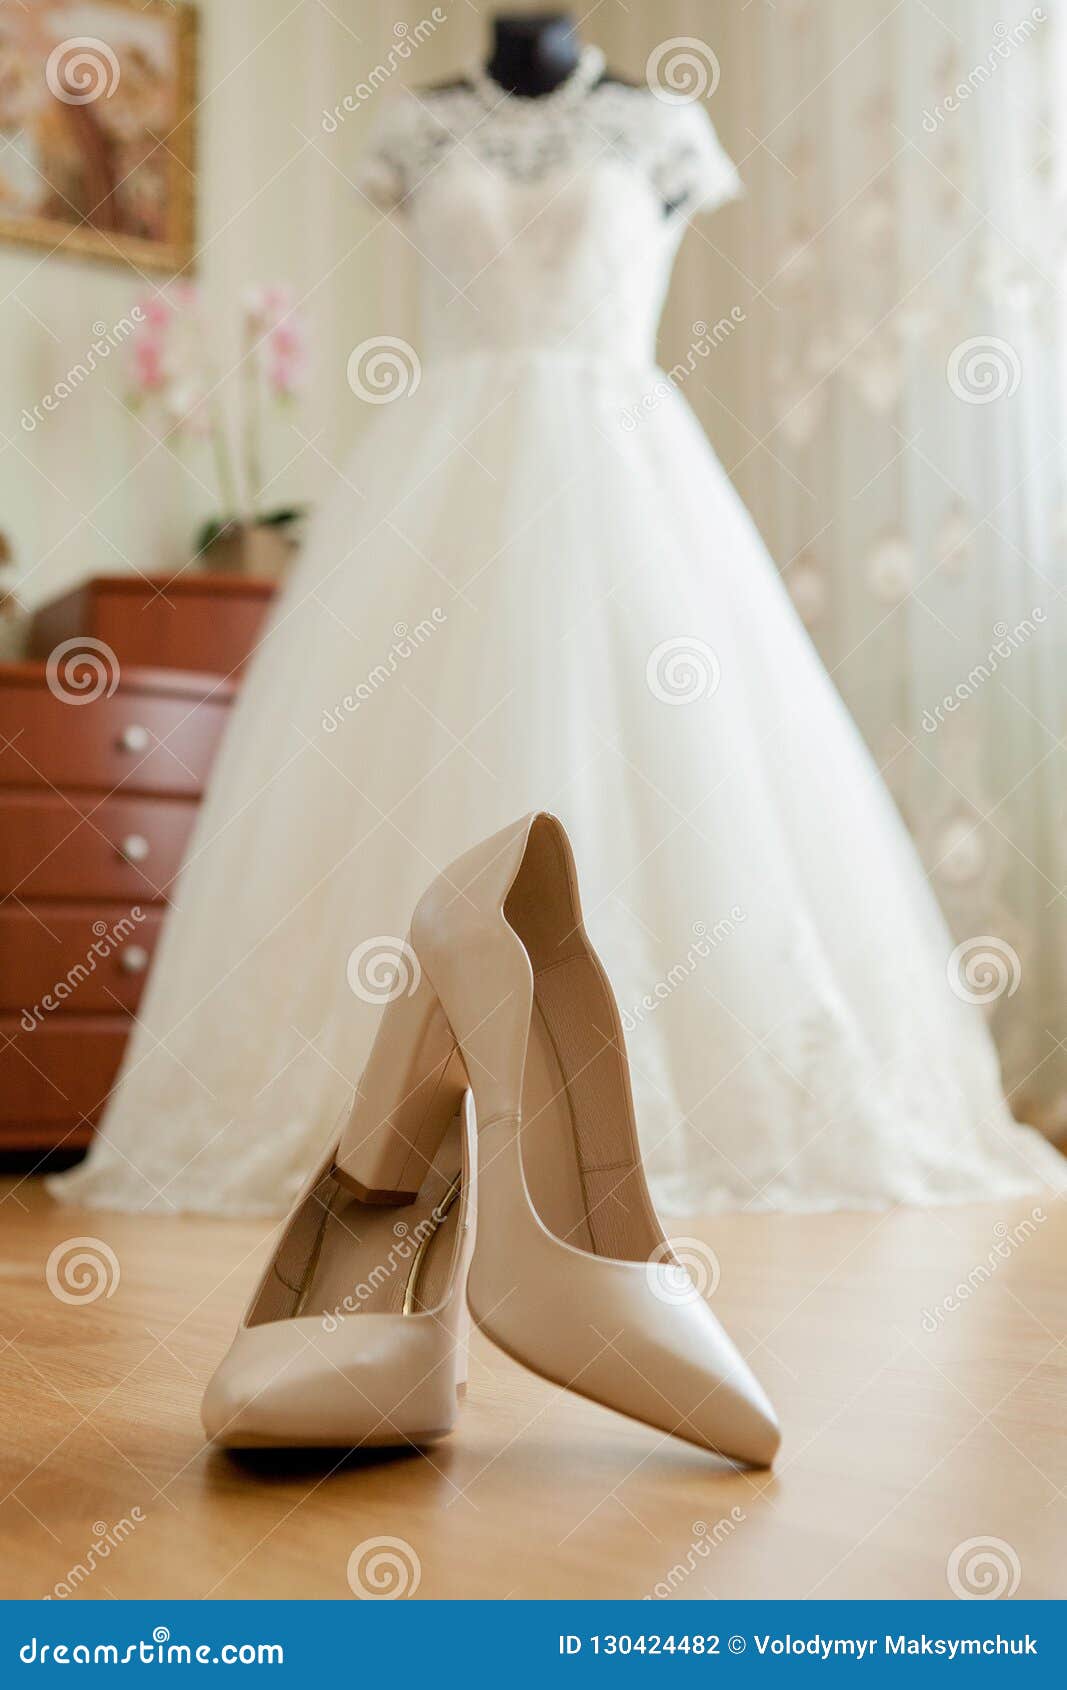 wedding shoes next